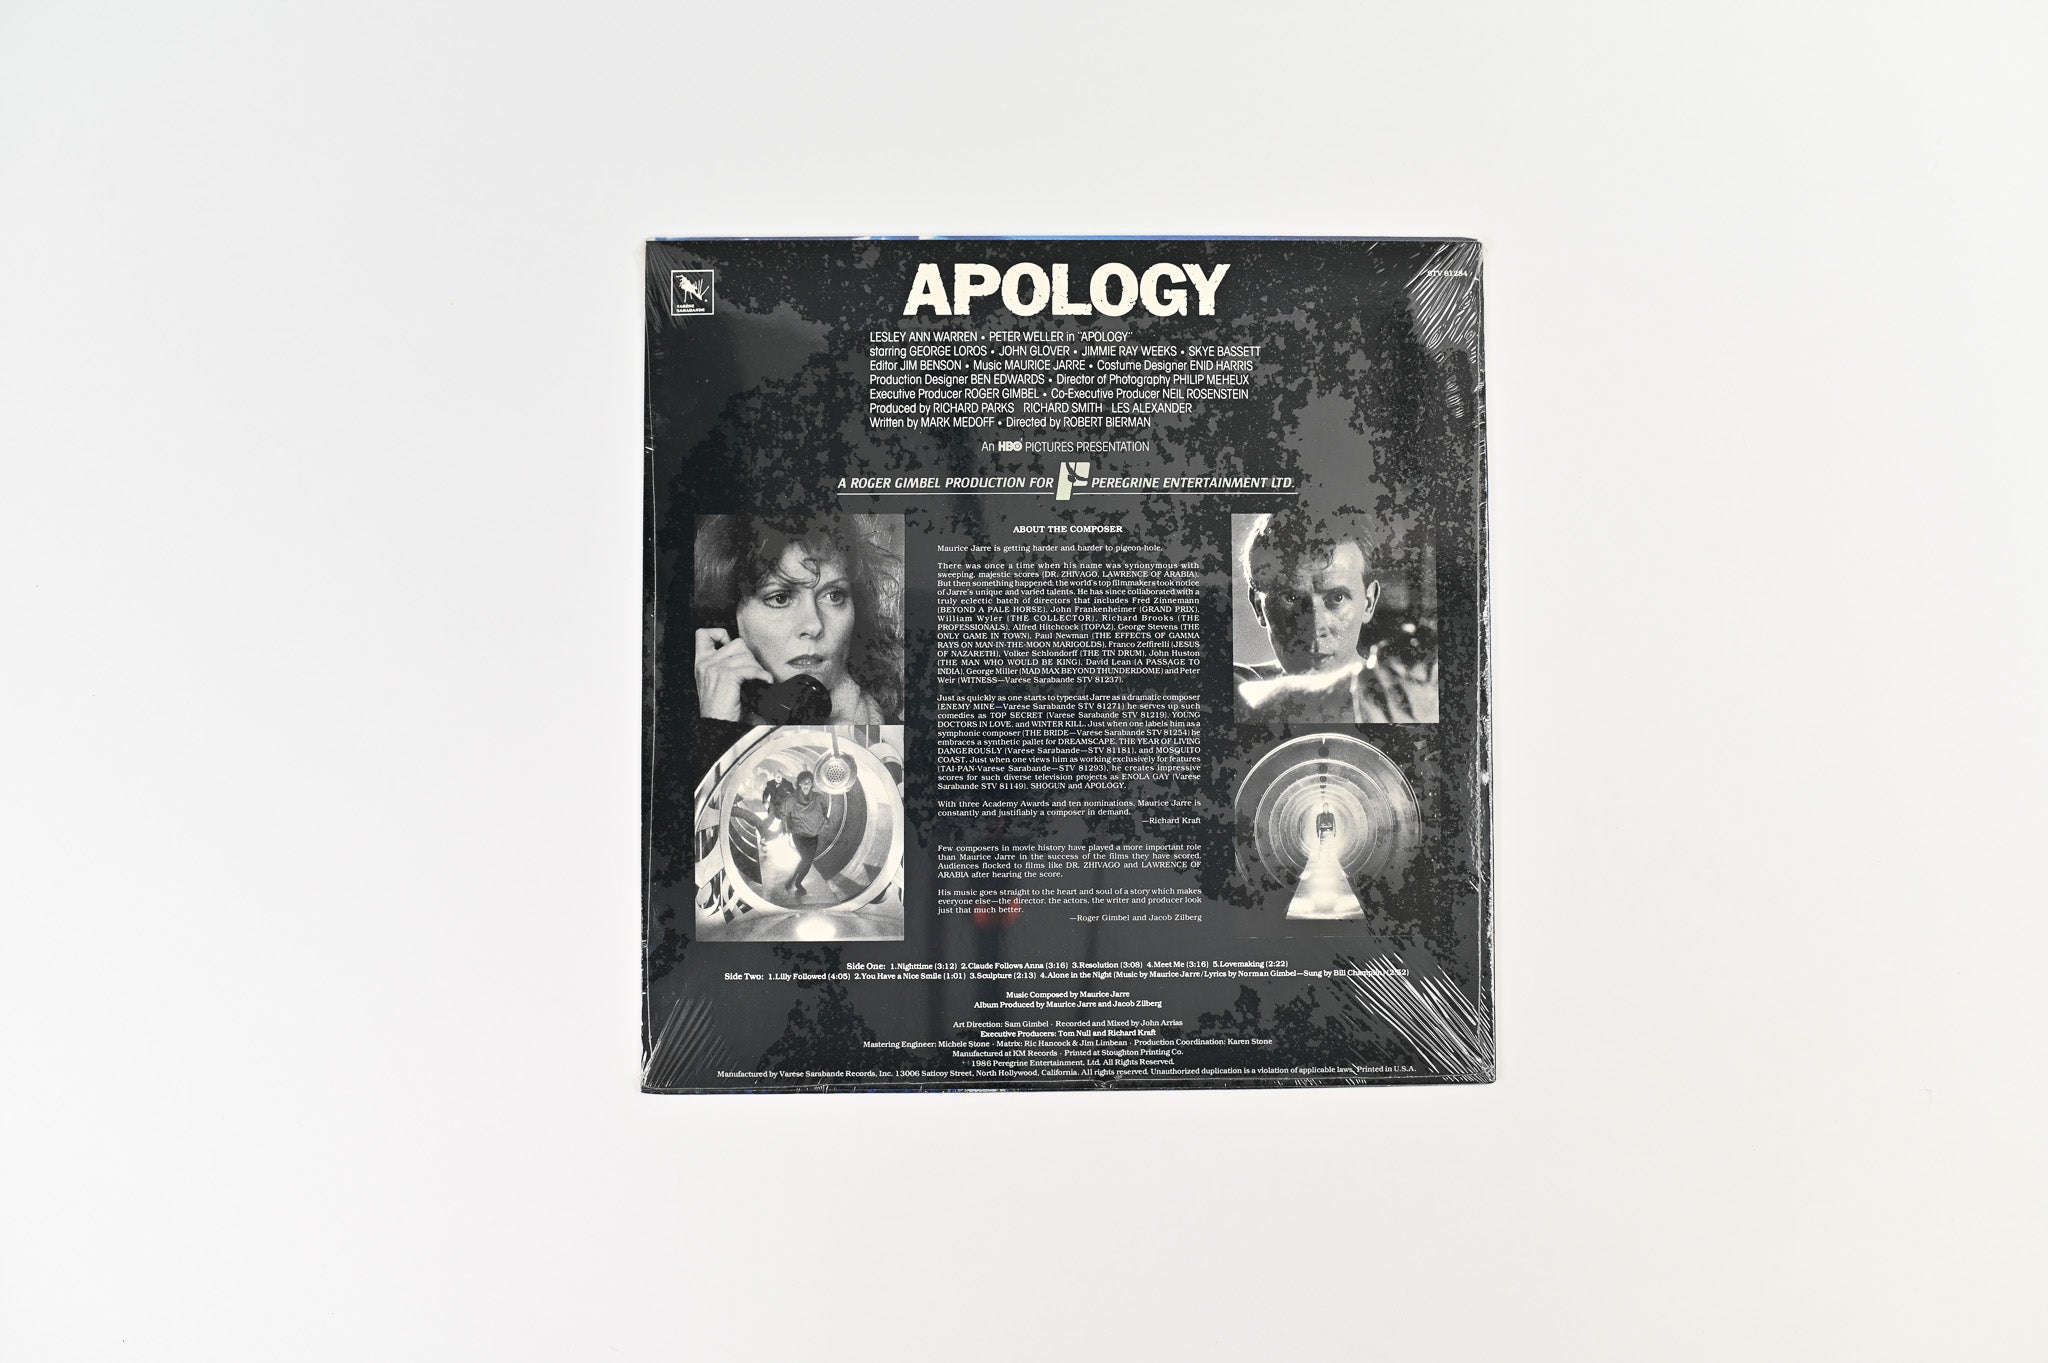 Maurice Jarre - Apology - Original Soundtrack on Varese Sarabande Sealed